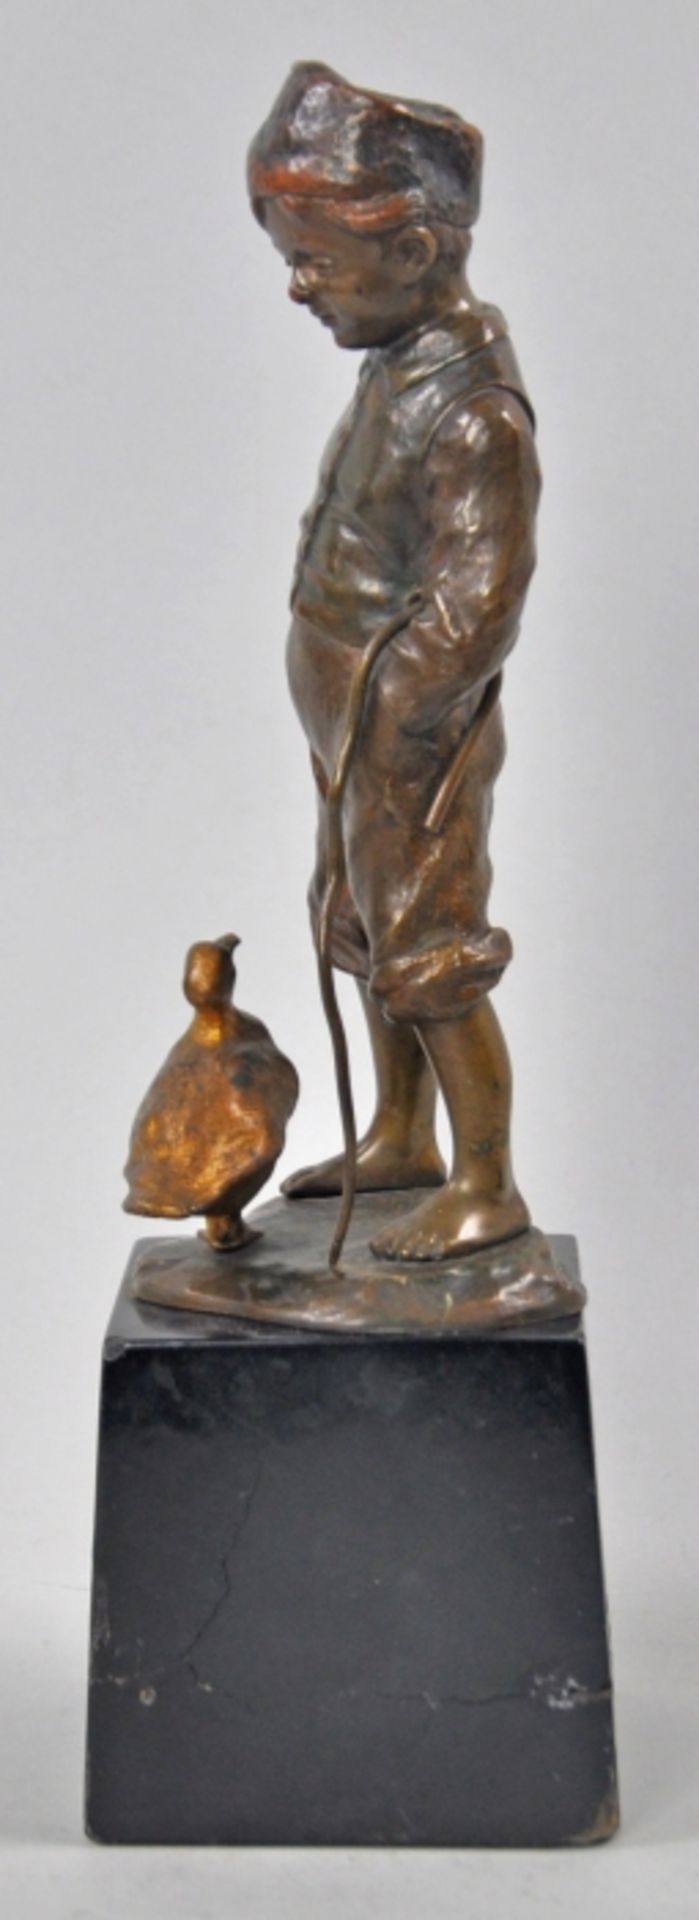 SCHMIDT-FELLING Julius Paul (1835 Berlin - 1920) "Gänsehirte", Junge mit Händen in den Taschen, - Image 2 of 3